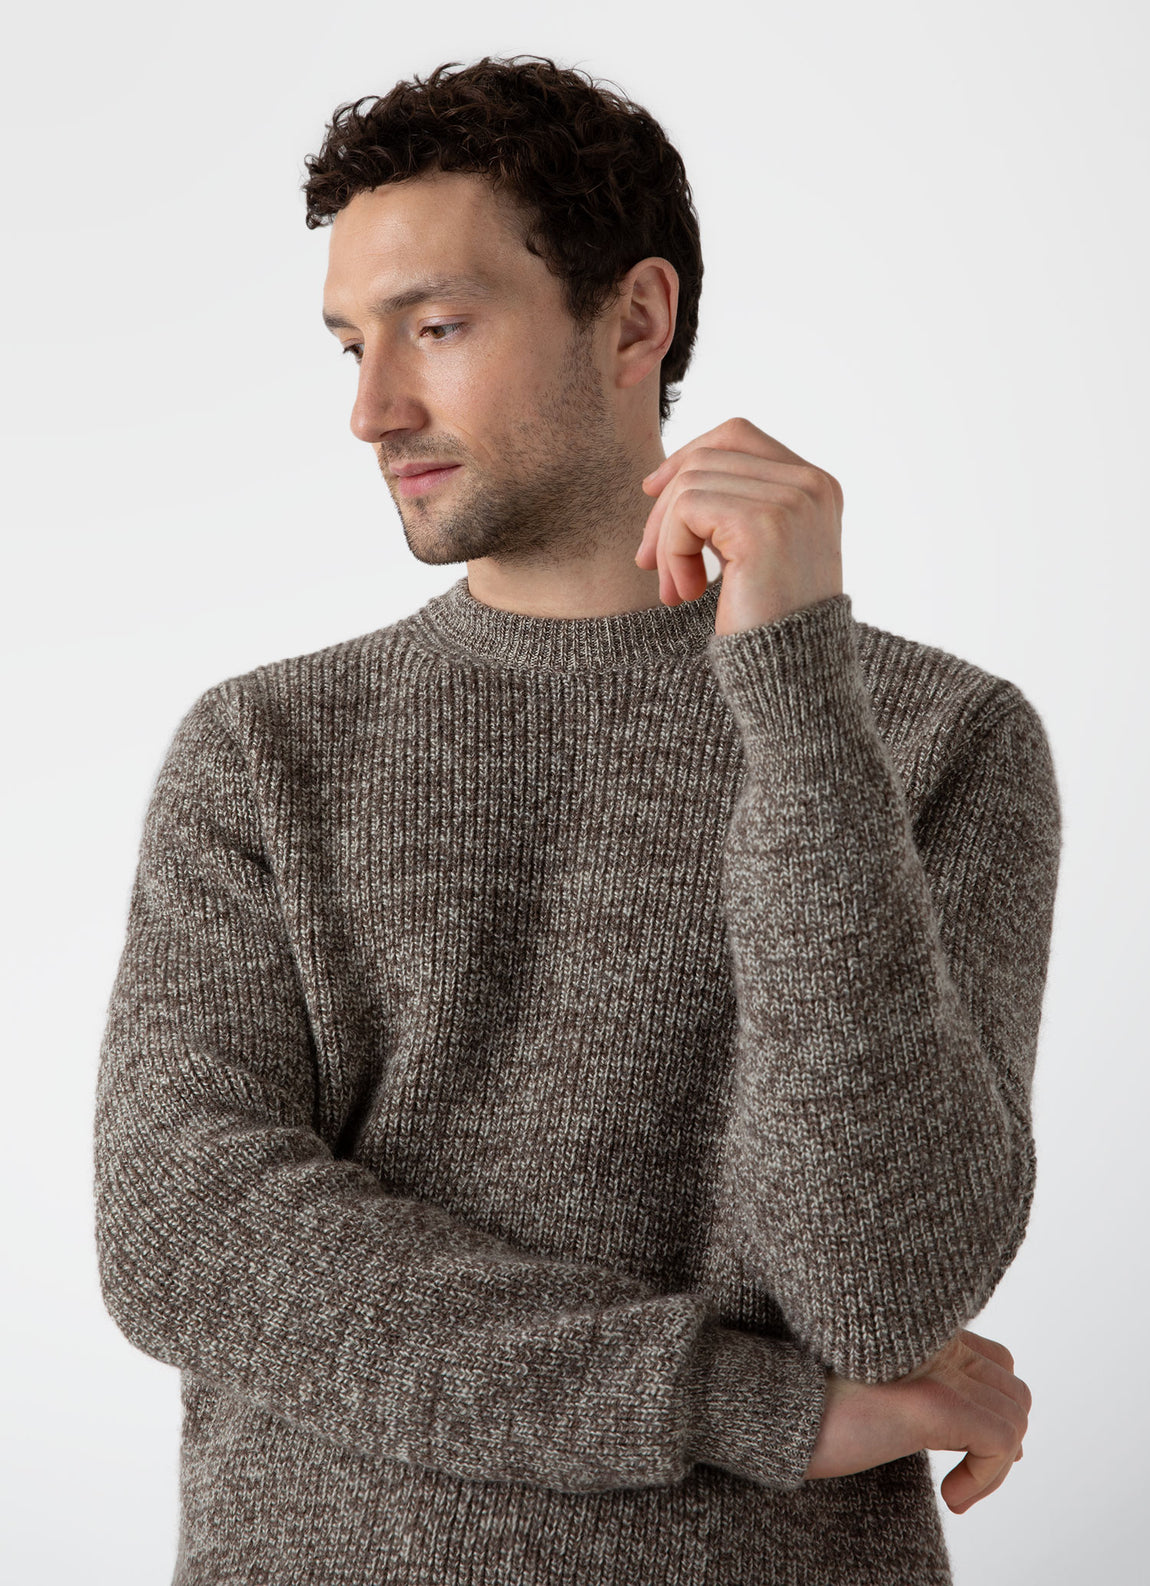 Men's Luxury British Wool Jumper in Natural Ecru/Brown Twist | Sunspel